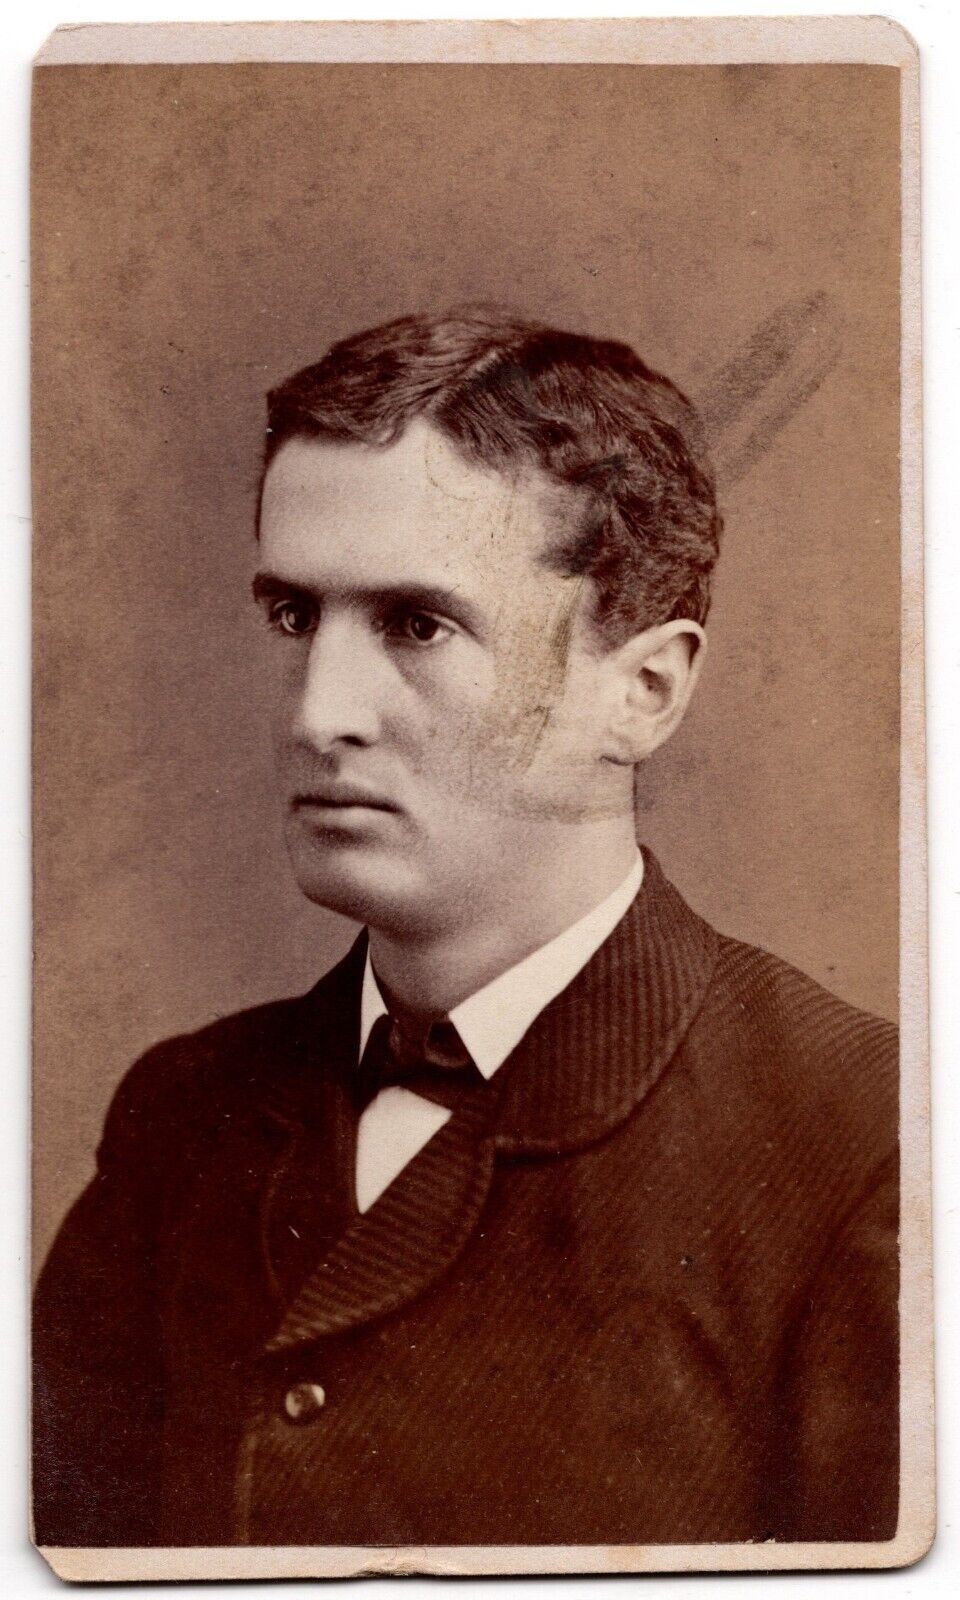 ANTIQUE CDV CIRCA 1880s C.W. TALLMAN HANDSOME YOUNG MAN IN SUIT BATAVIA NEW YORK